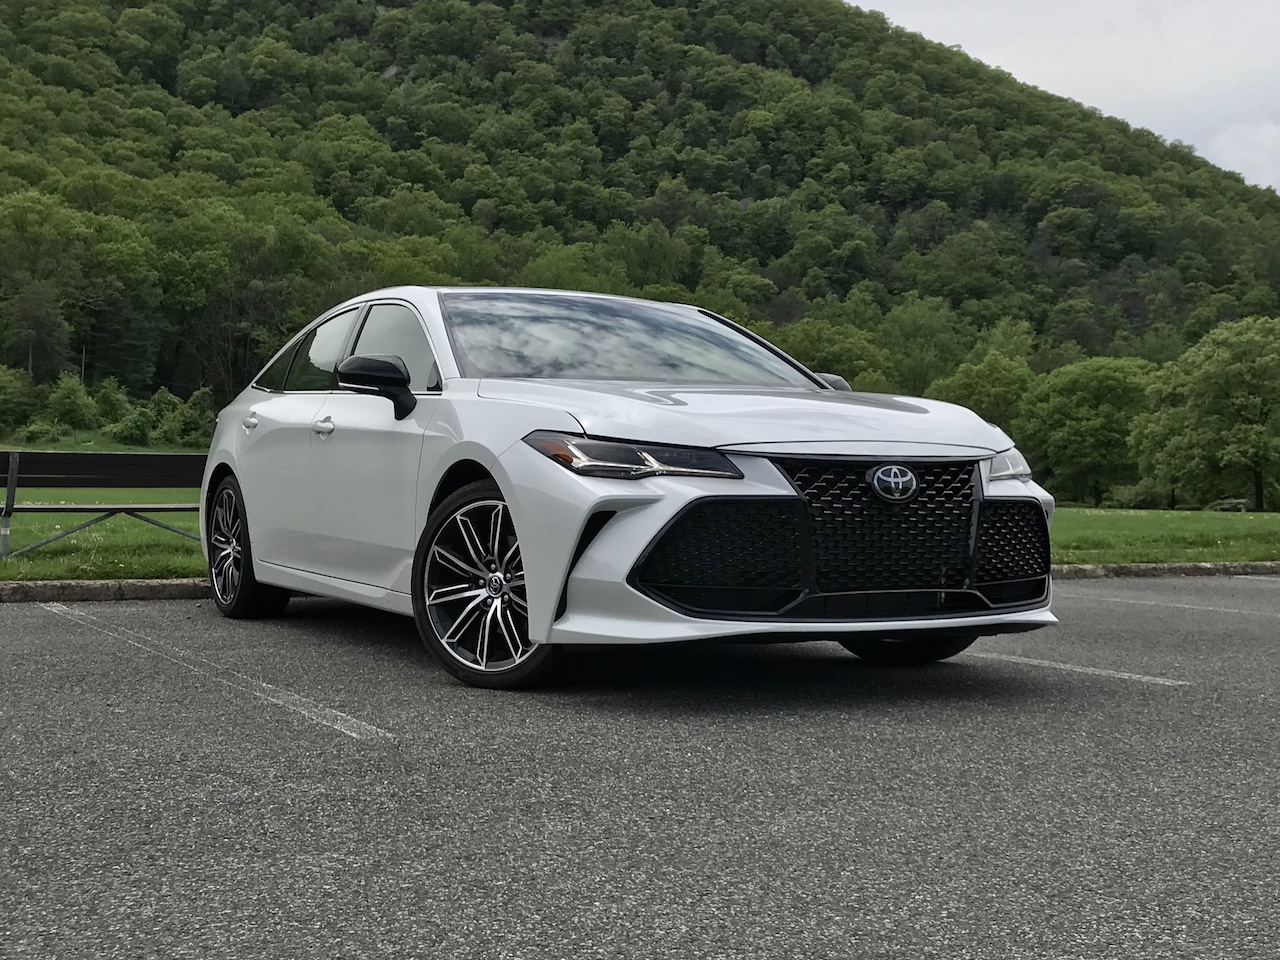 2019-Toyota-Avalon-Touring-Review-01.jpg